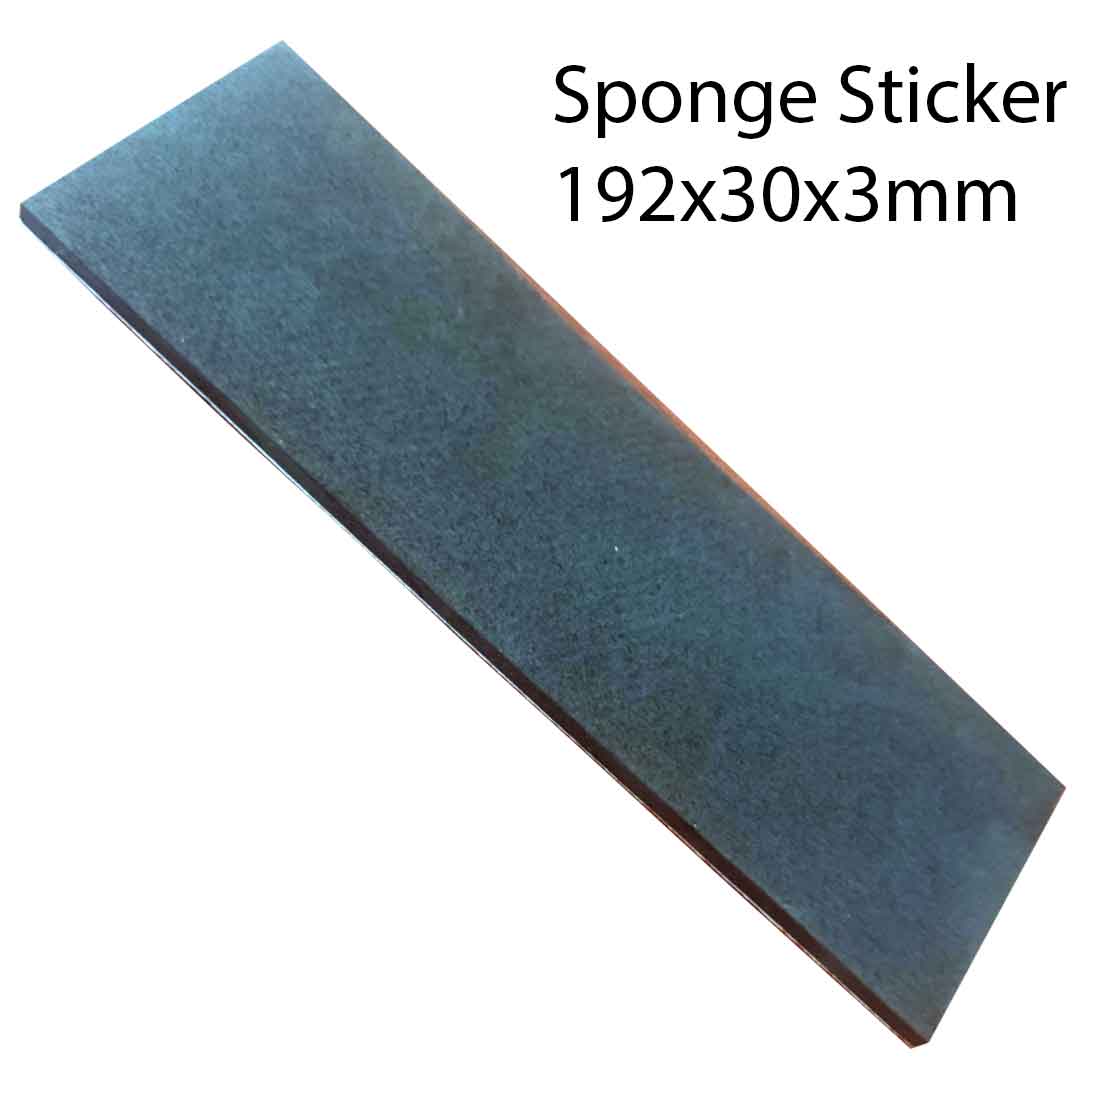 Sponge Stickers Size 192 x 30 x 3mm for Dualtron Ultra 2